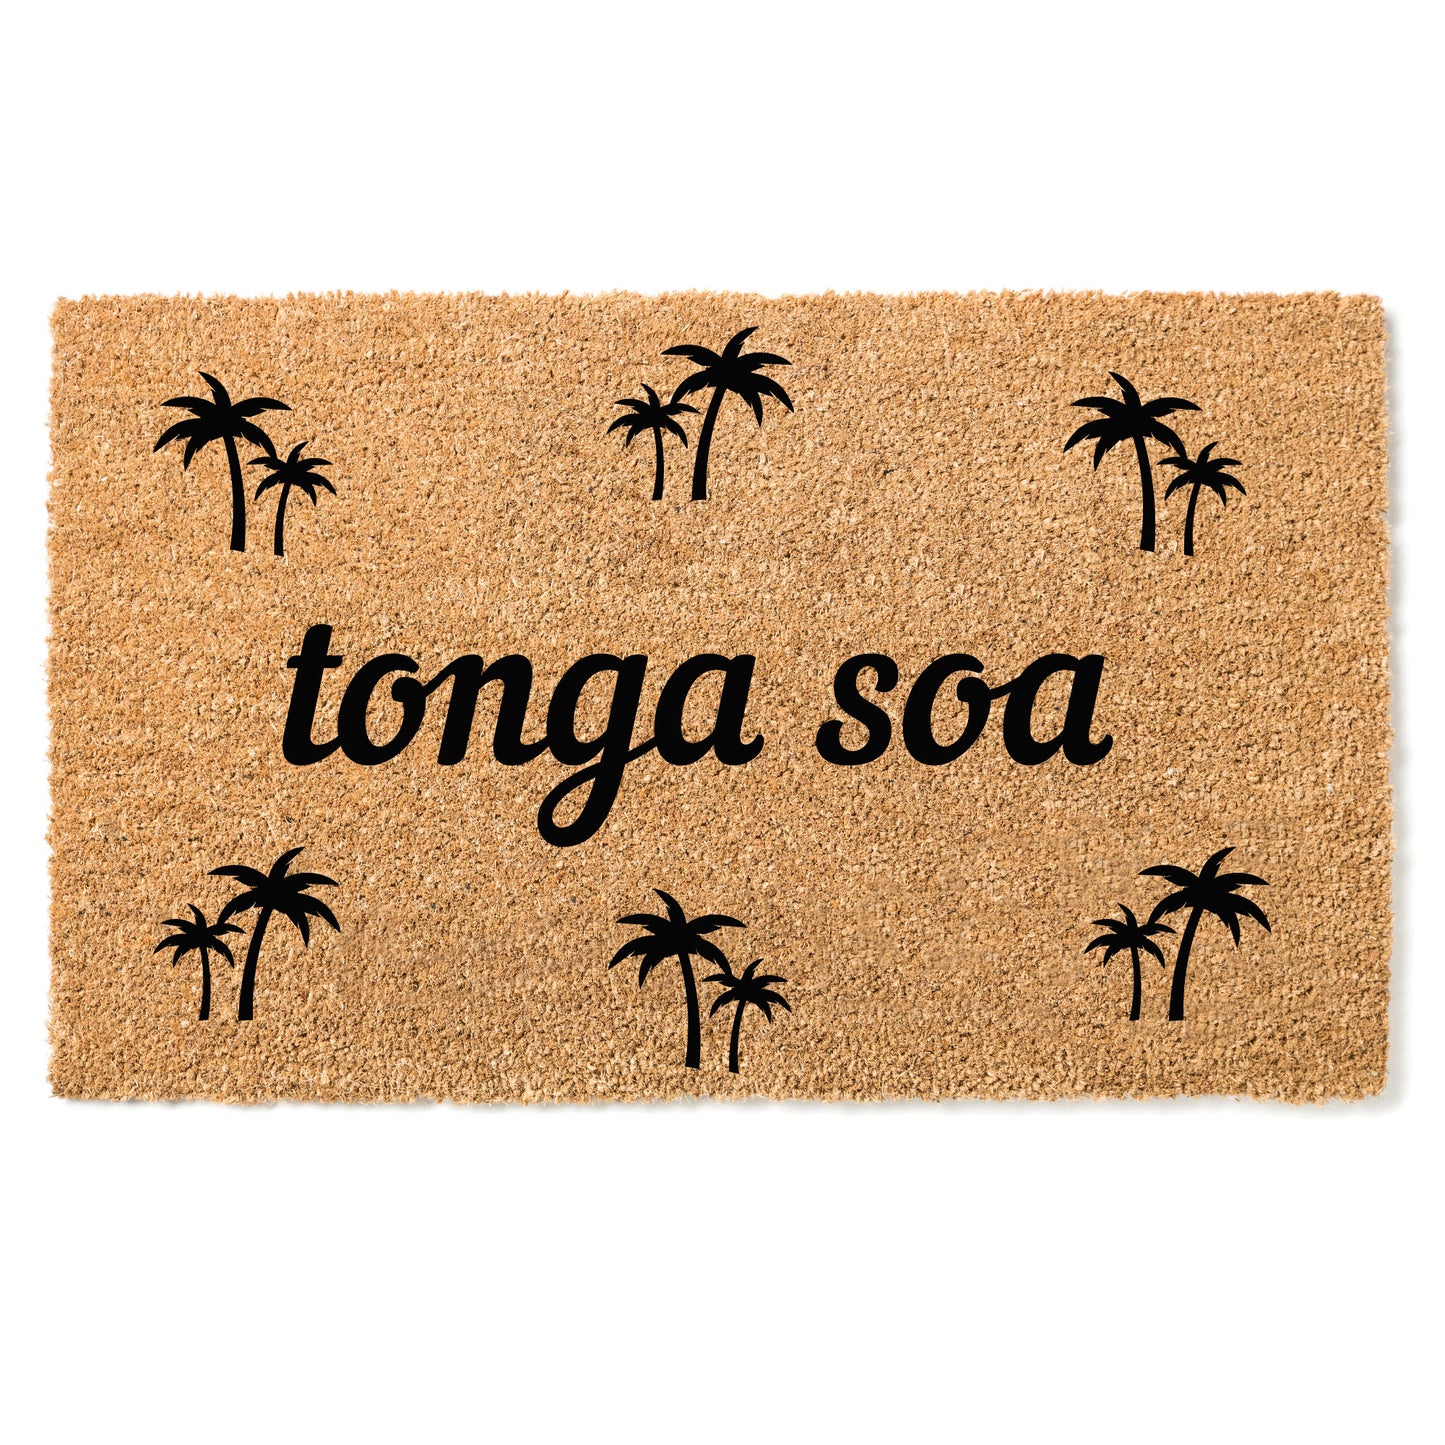 "Tonga Soa" door mat- "Welcome" in Malagasy